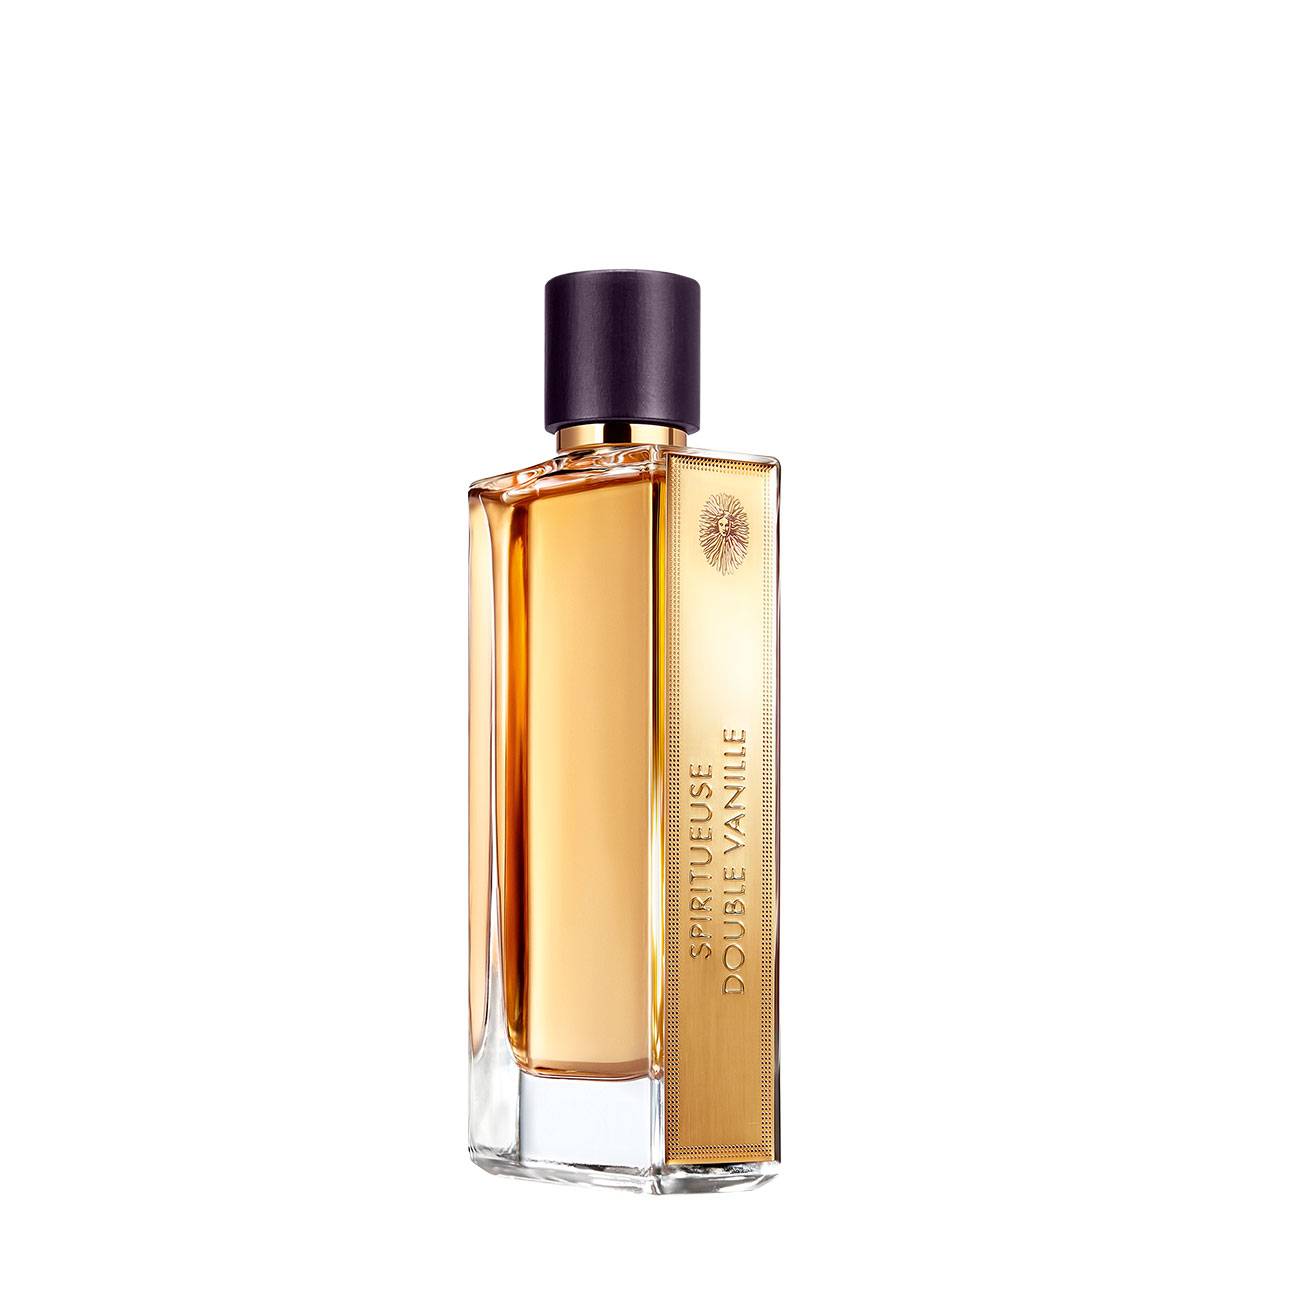 Apa de Parfum Guerlain SPIRITUEUSE DOUBLE VANILLE 75ml cu comanda online